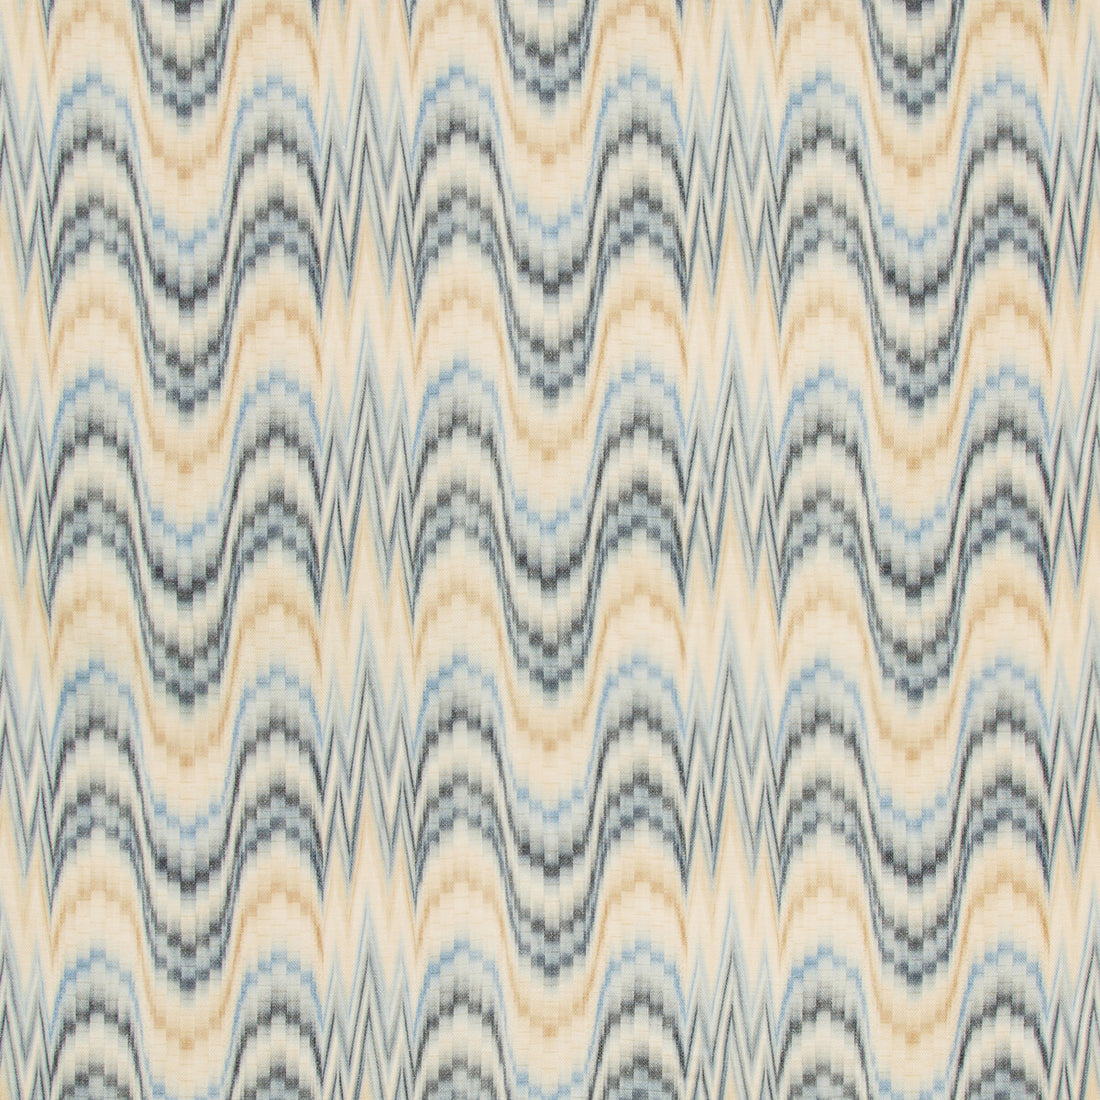 Jasper Print fabric in capri/indigo color - pattern 2020185.550.0 - by Lee Jofa in the Avondale collection